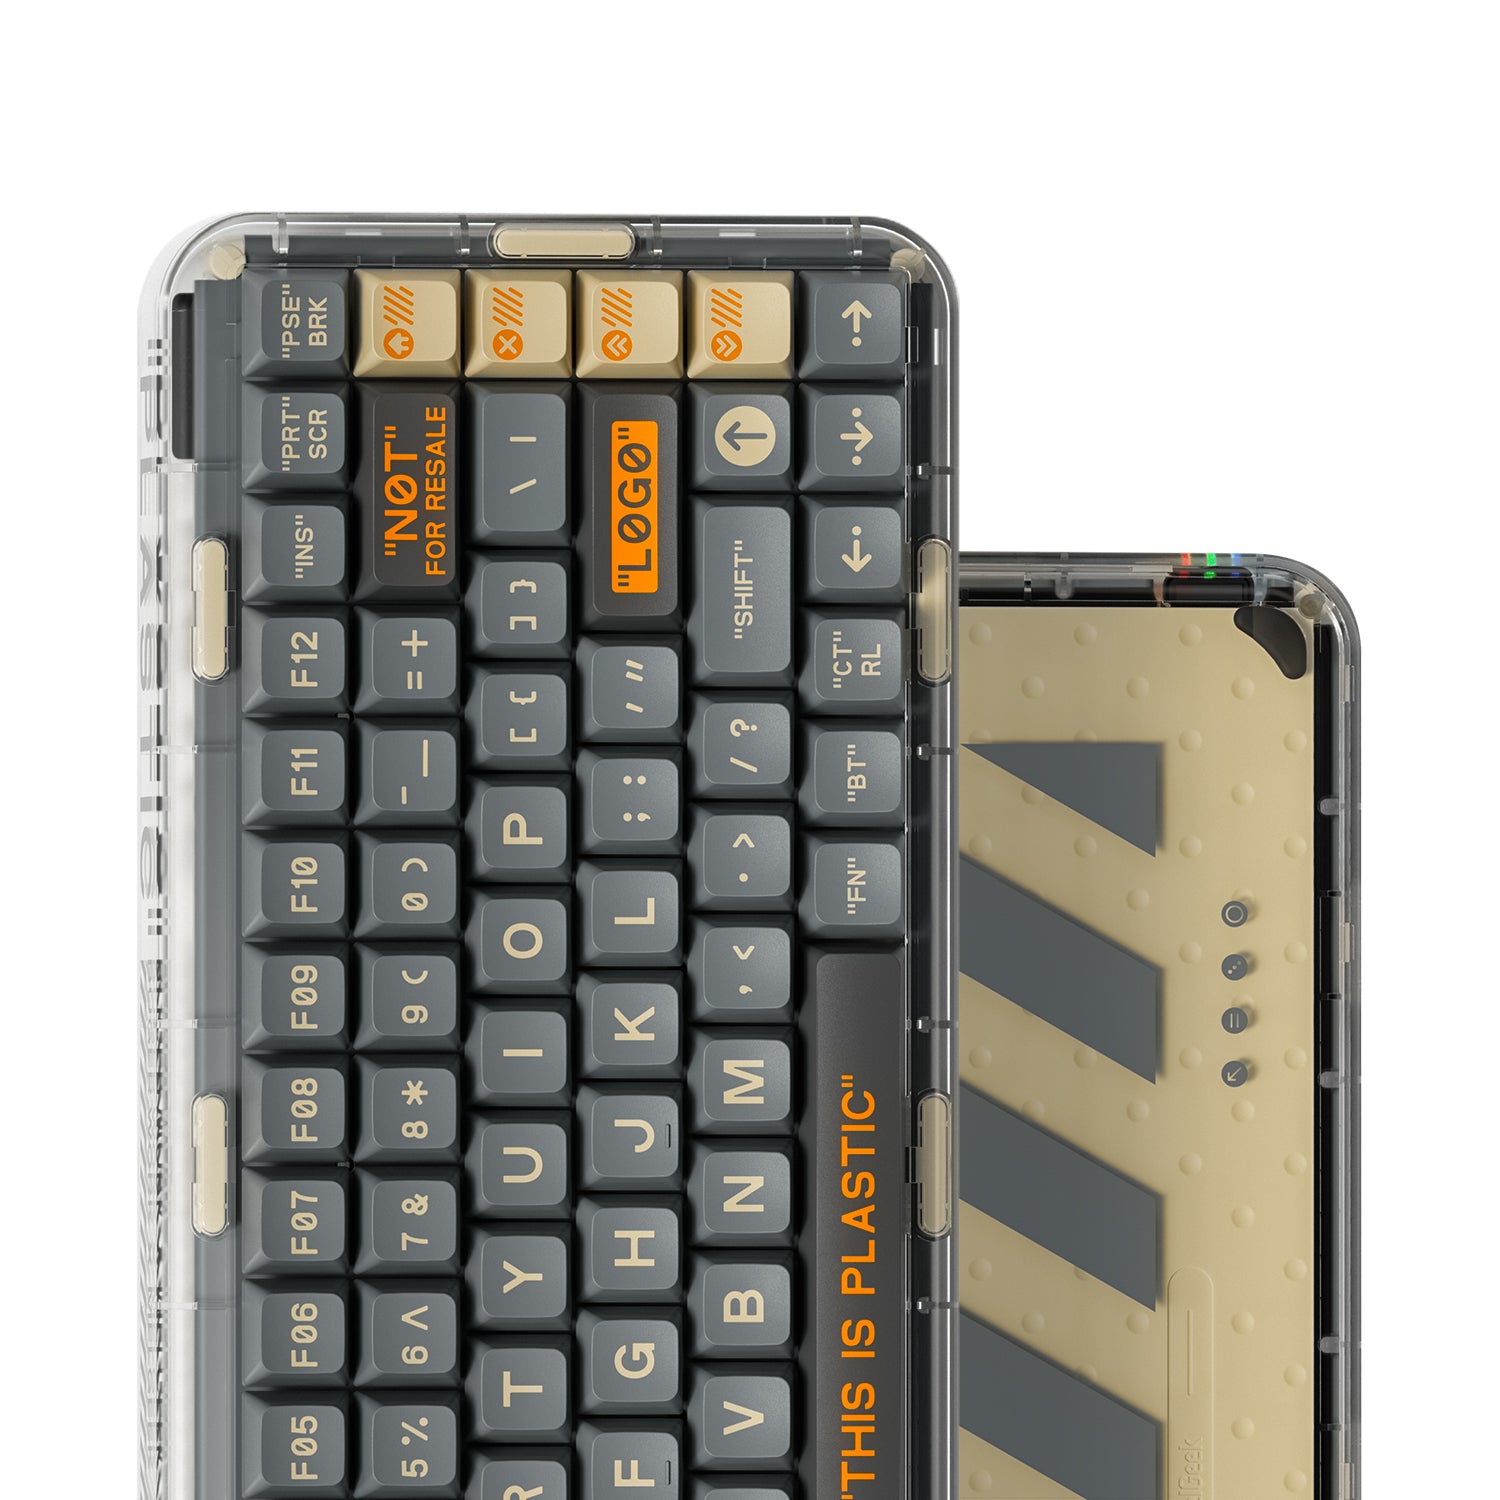 MelGeek Mojo84 Mechanical Keyboard Collection